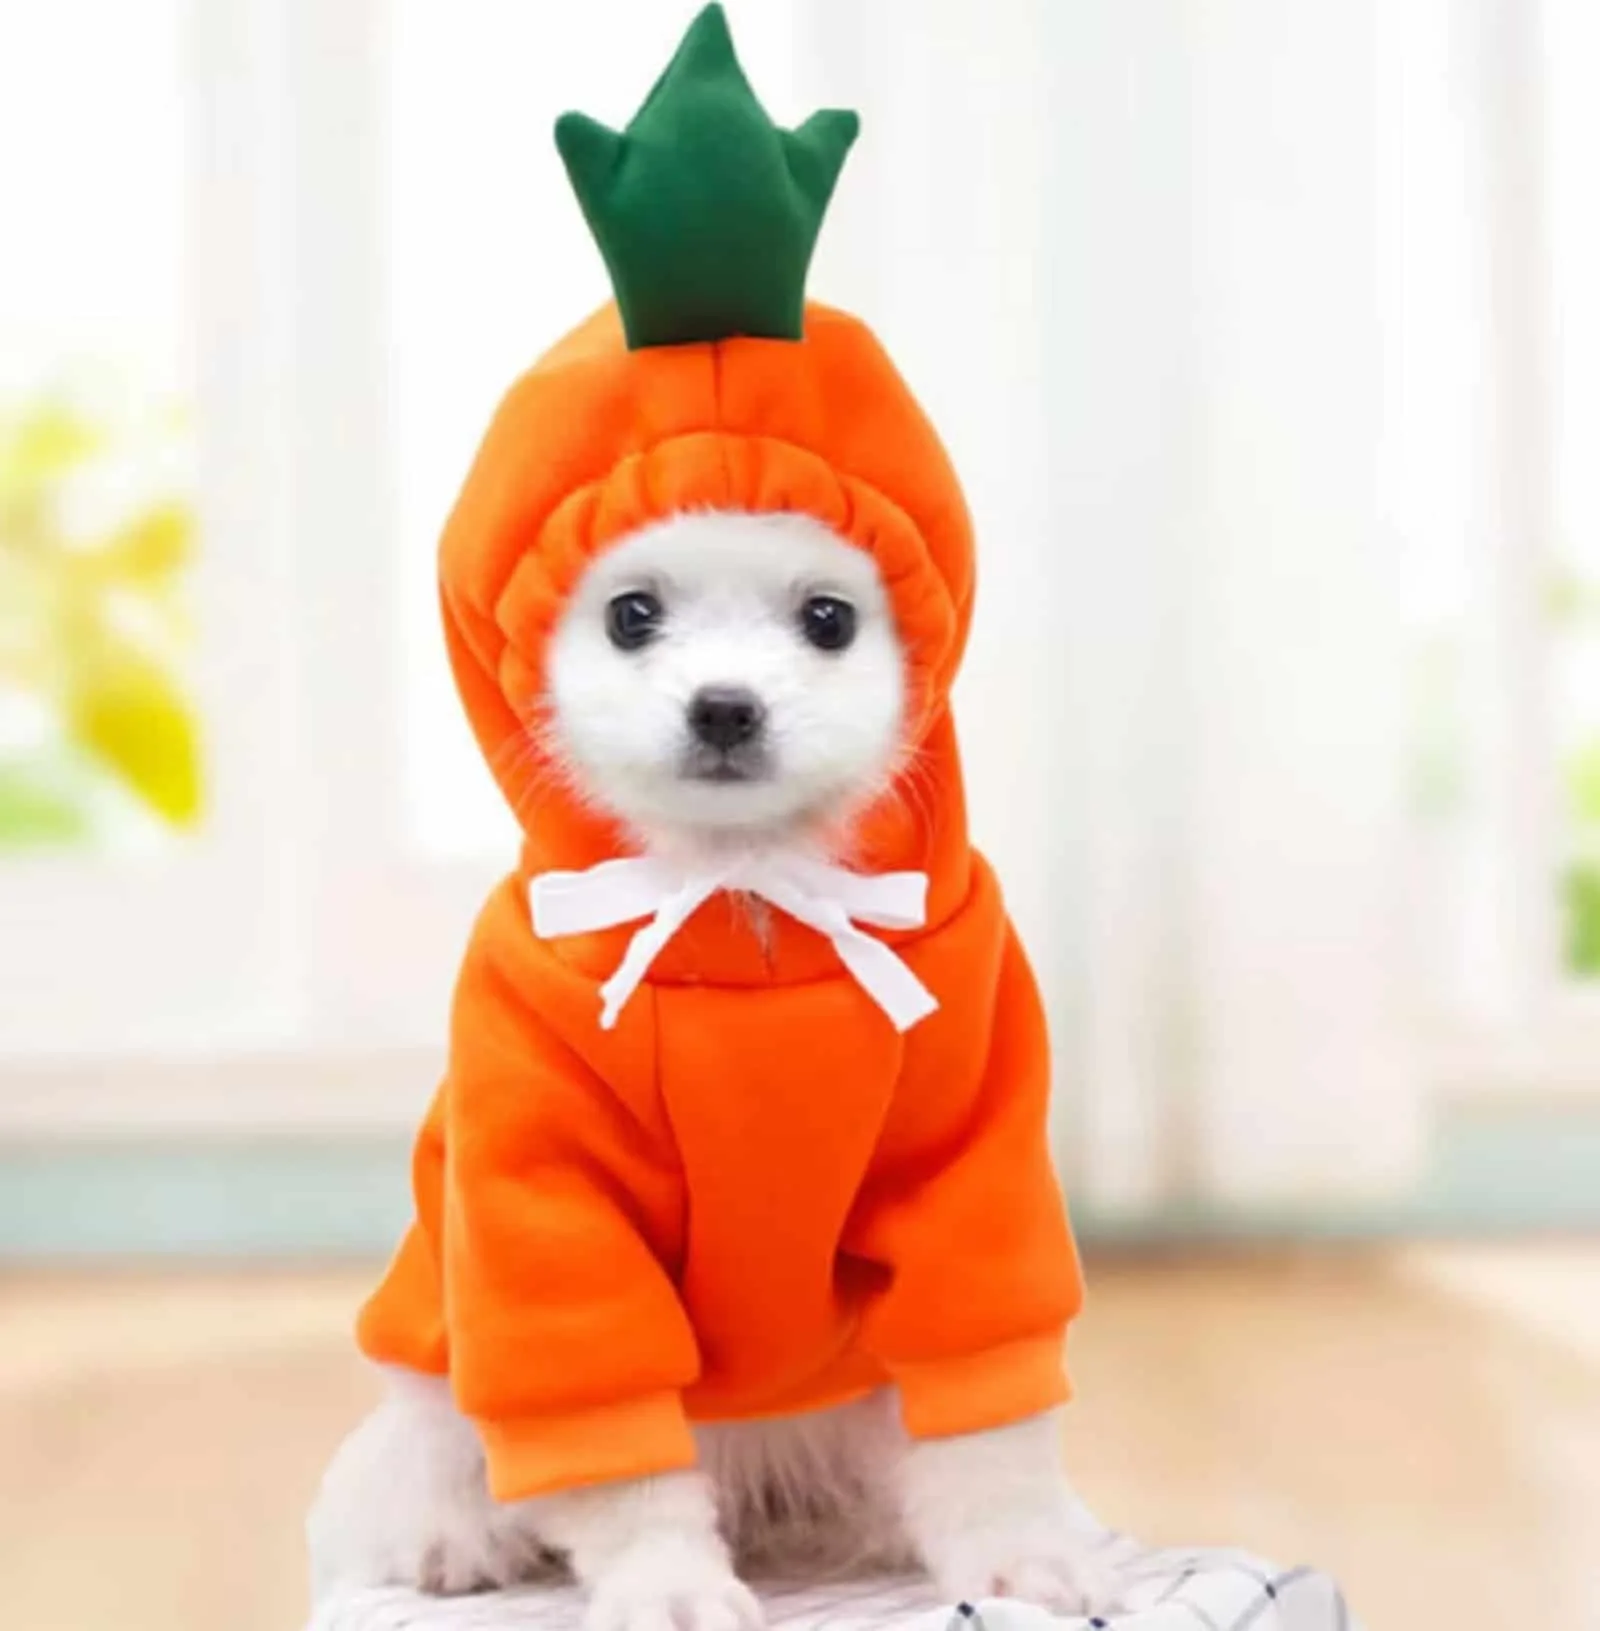 dog wearing carrot costume sitting indoors